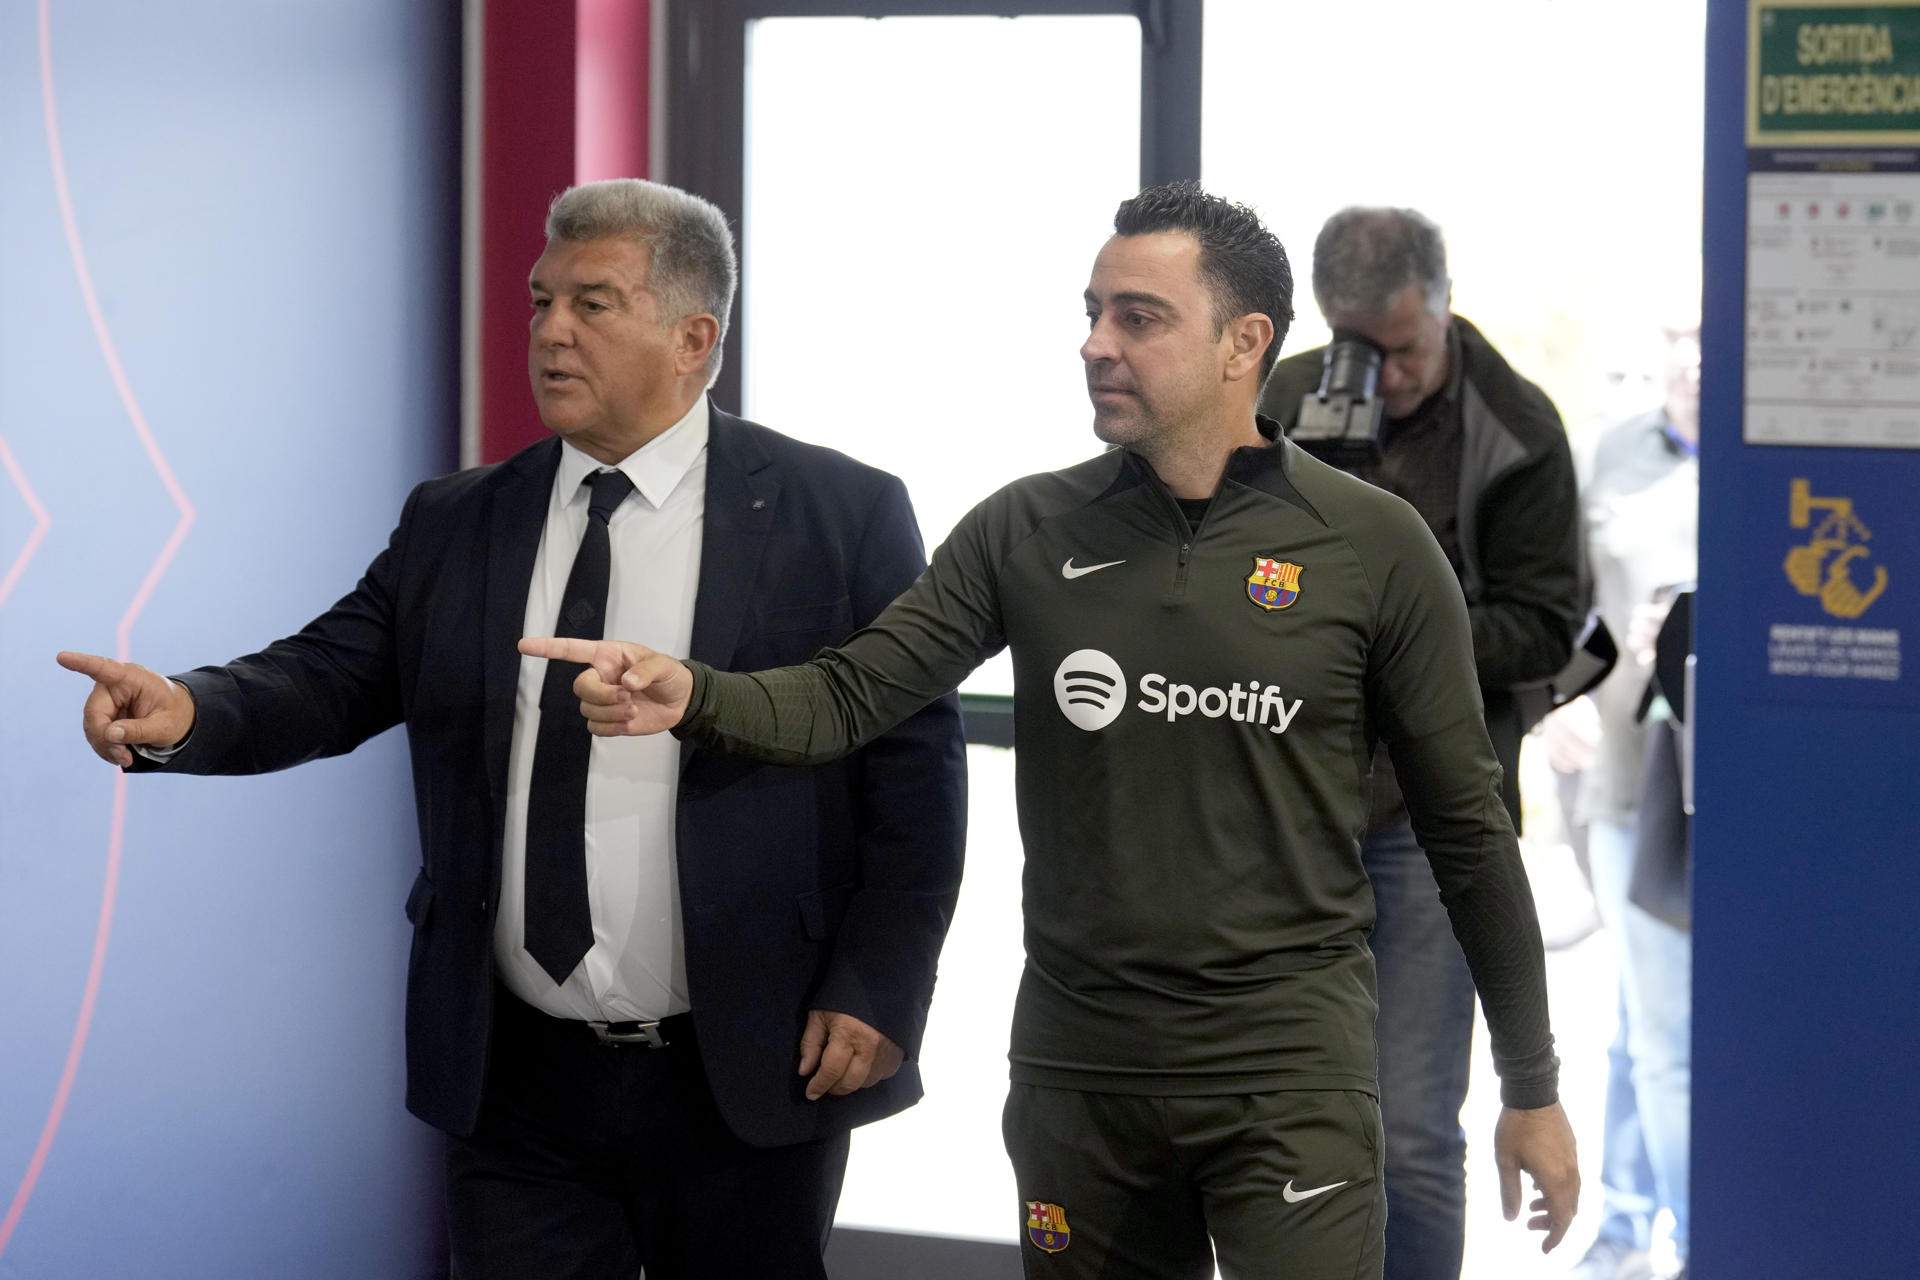 KO al fichaje estrella de Joan Laporta para el Barça, no viene